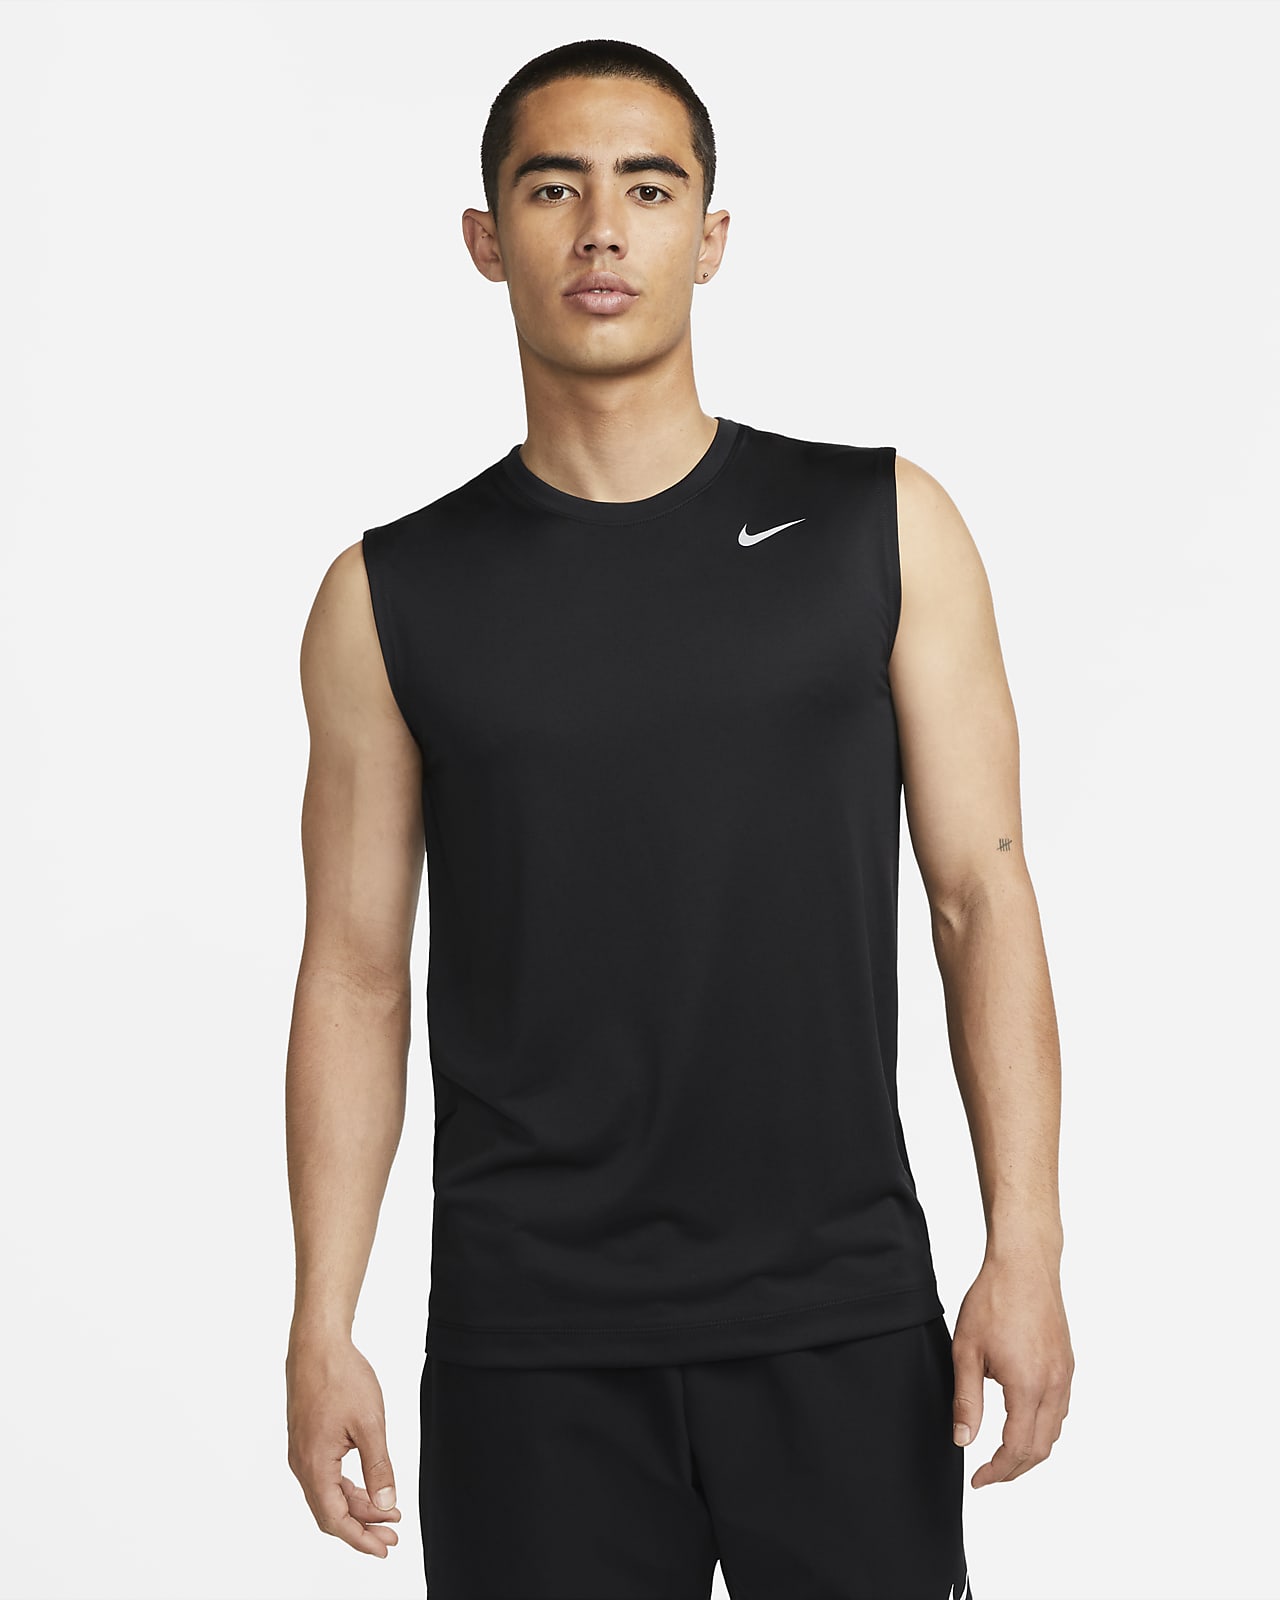 Kameraad betaling een vuurtje stoken Nike Dri-FIT Legend Men's Sleeveless Fitness T-Shirt. Nike JP